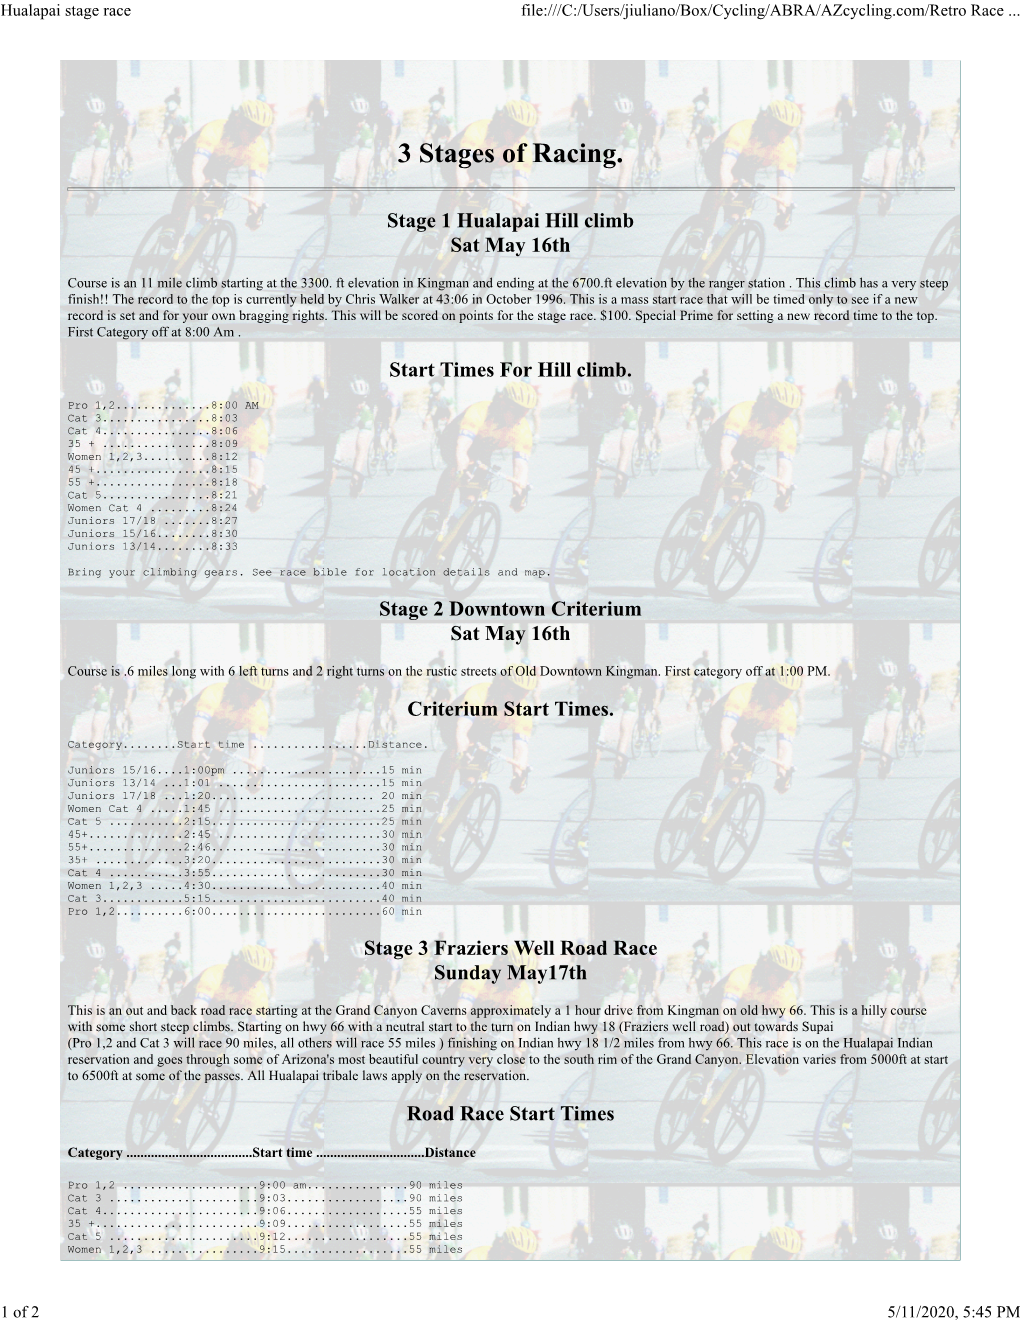 Hualapai Stage Race File:///C:/Users/Jiuliano/Box/Cycling/ABRA/Azcycling.Com/Retro Race